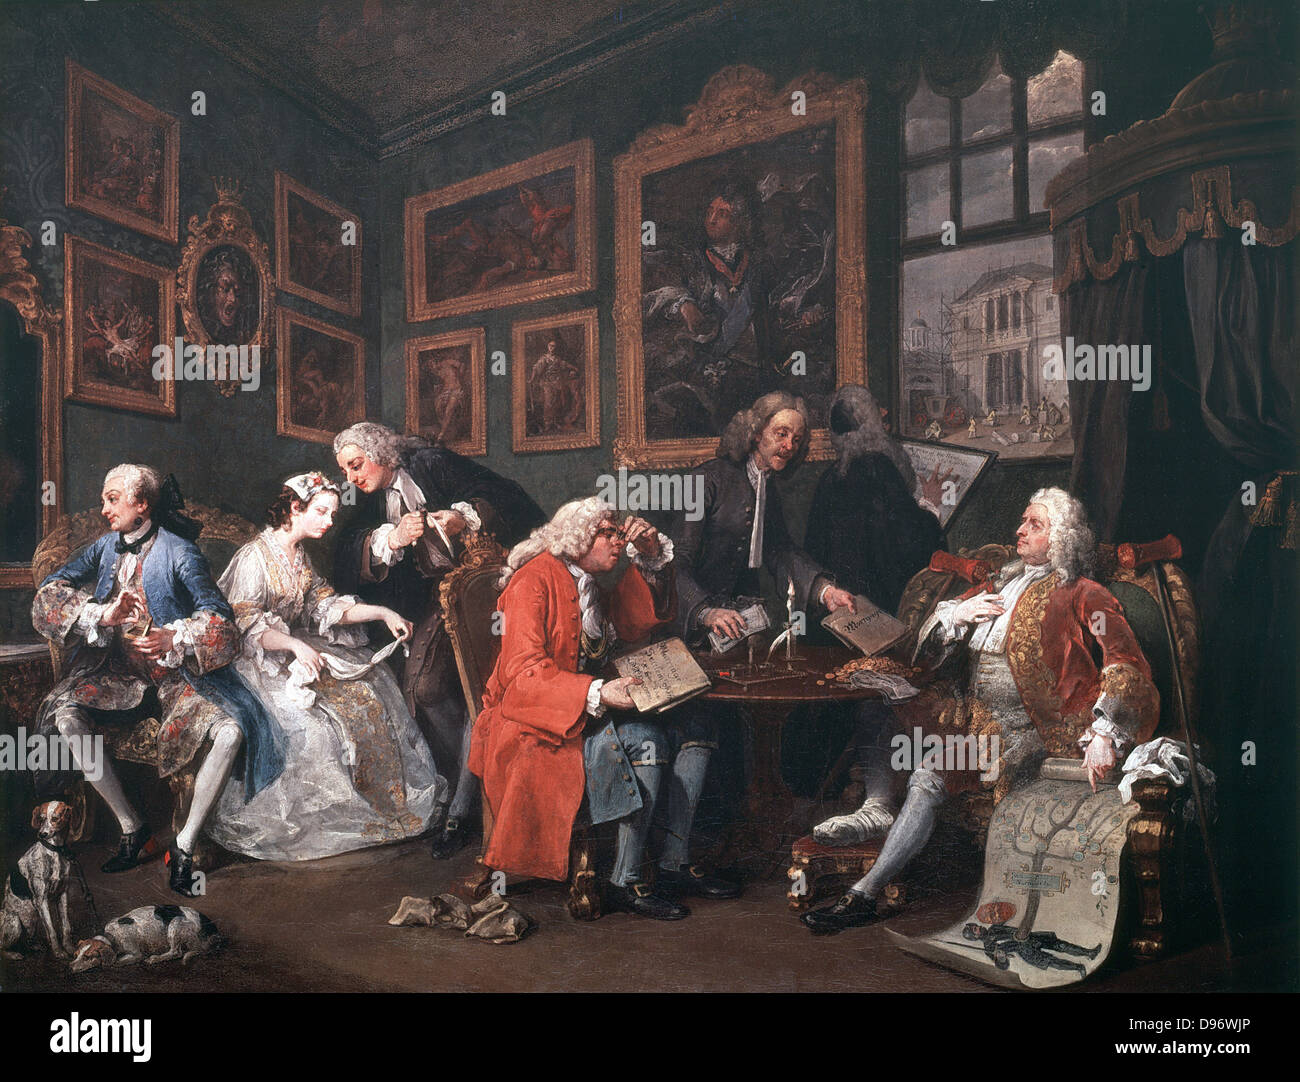 Matrimonio a la mode: Il matrimonio Regolamento", 1743: William Hogarth (1697-1764) artista inglese. Olio su tela. Foto Stock